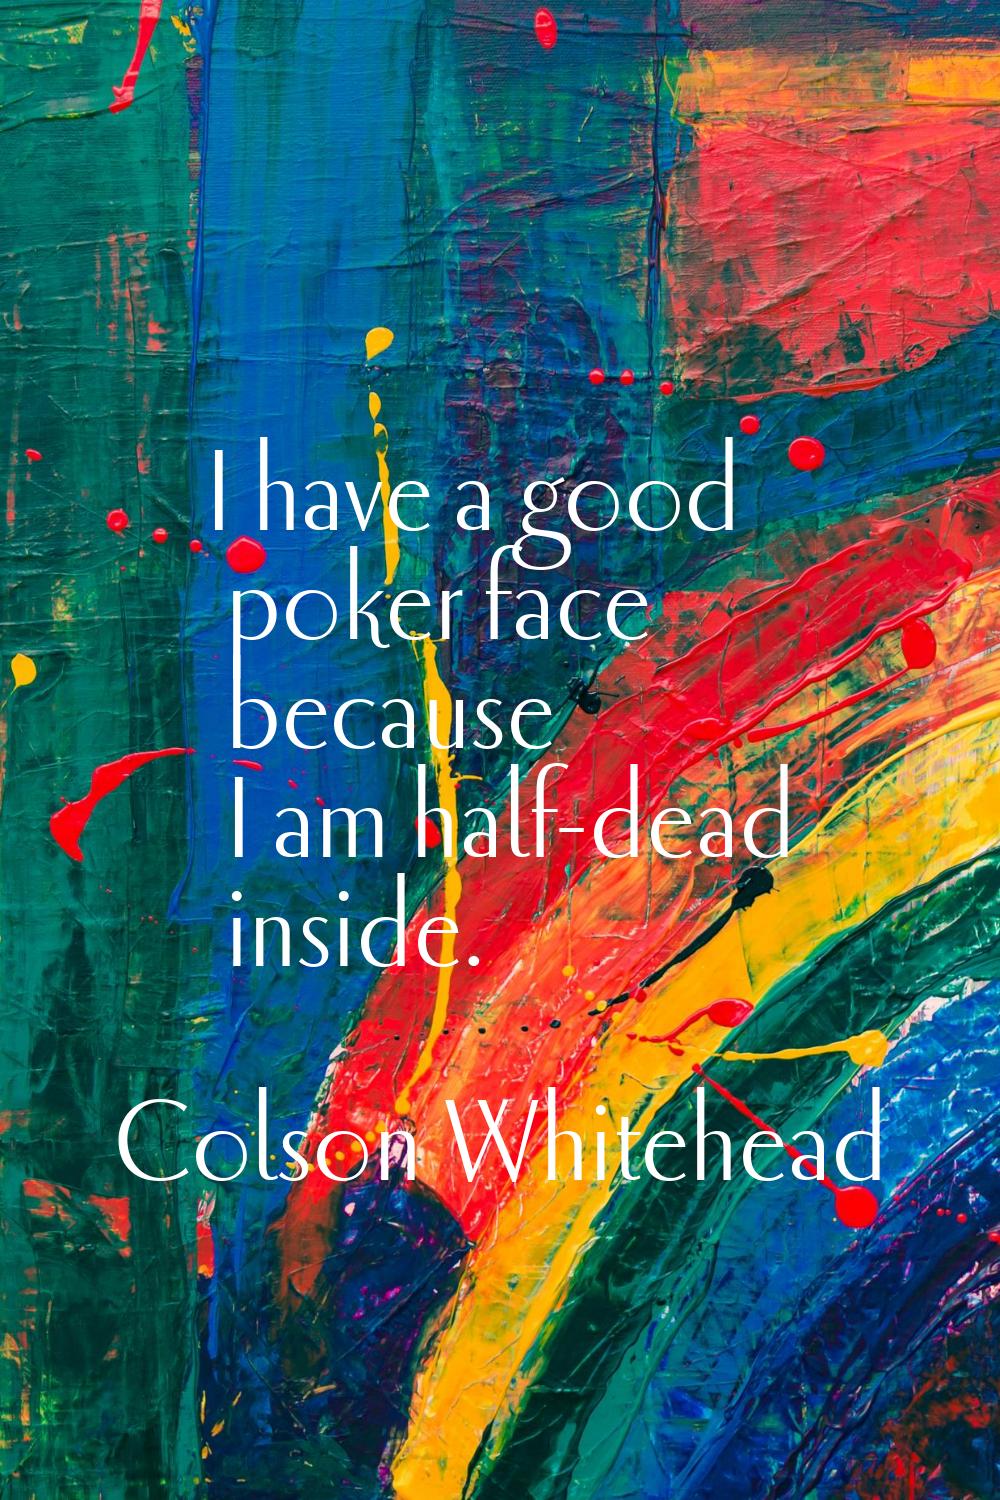 I have a good poker face because I am half-dead inside.